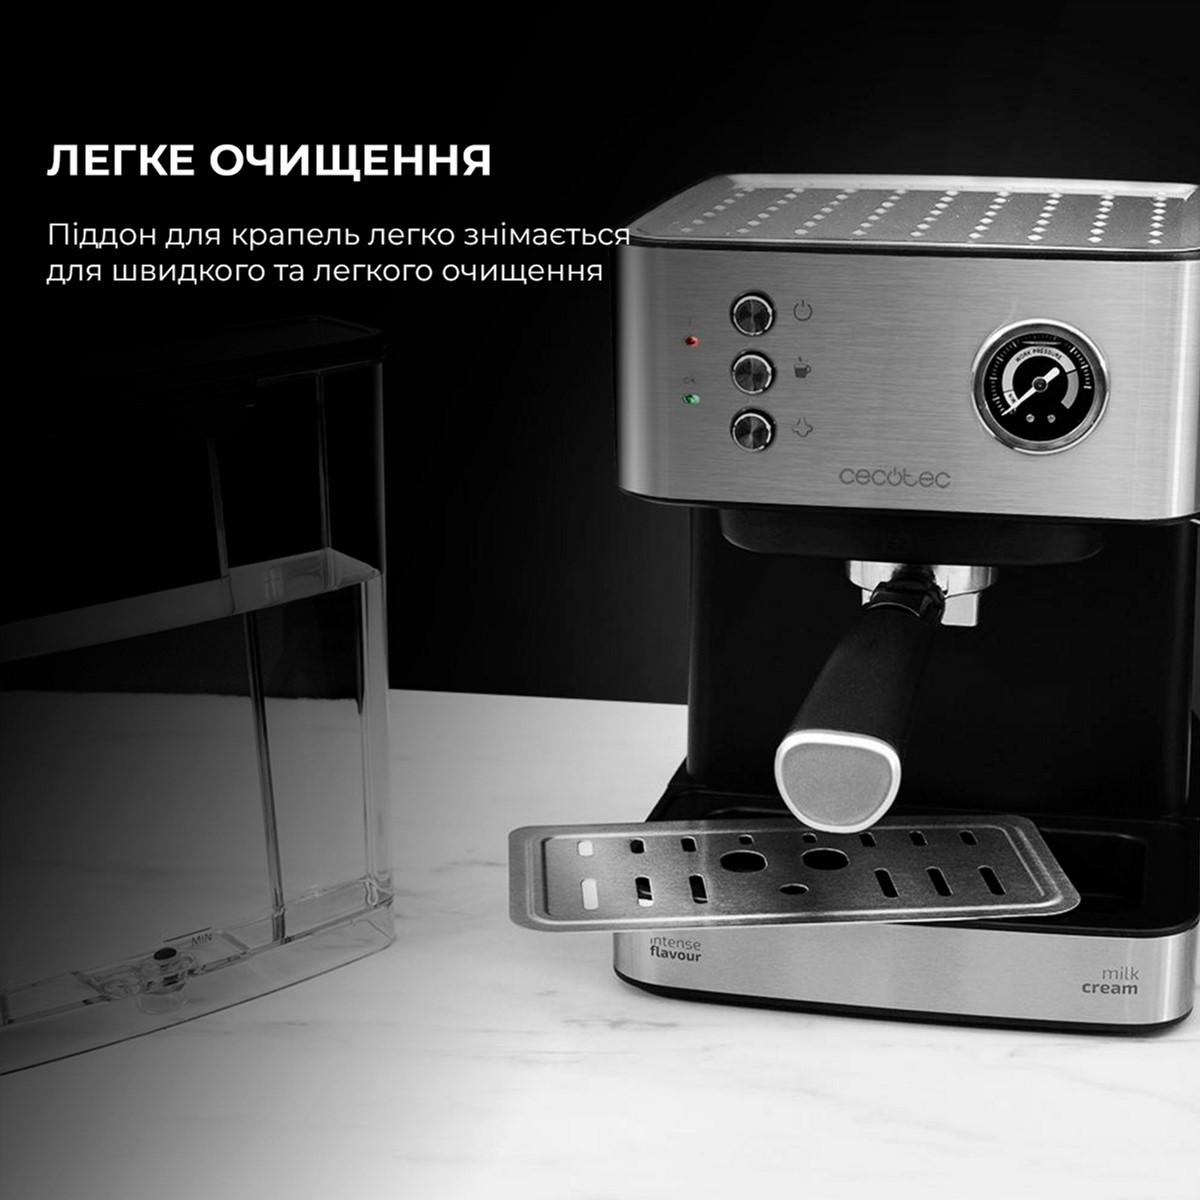 Cecotec Cafetera Express Power Espresso 20 Professionale